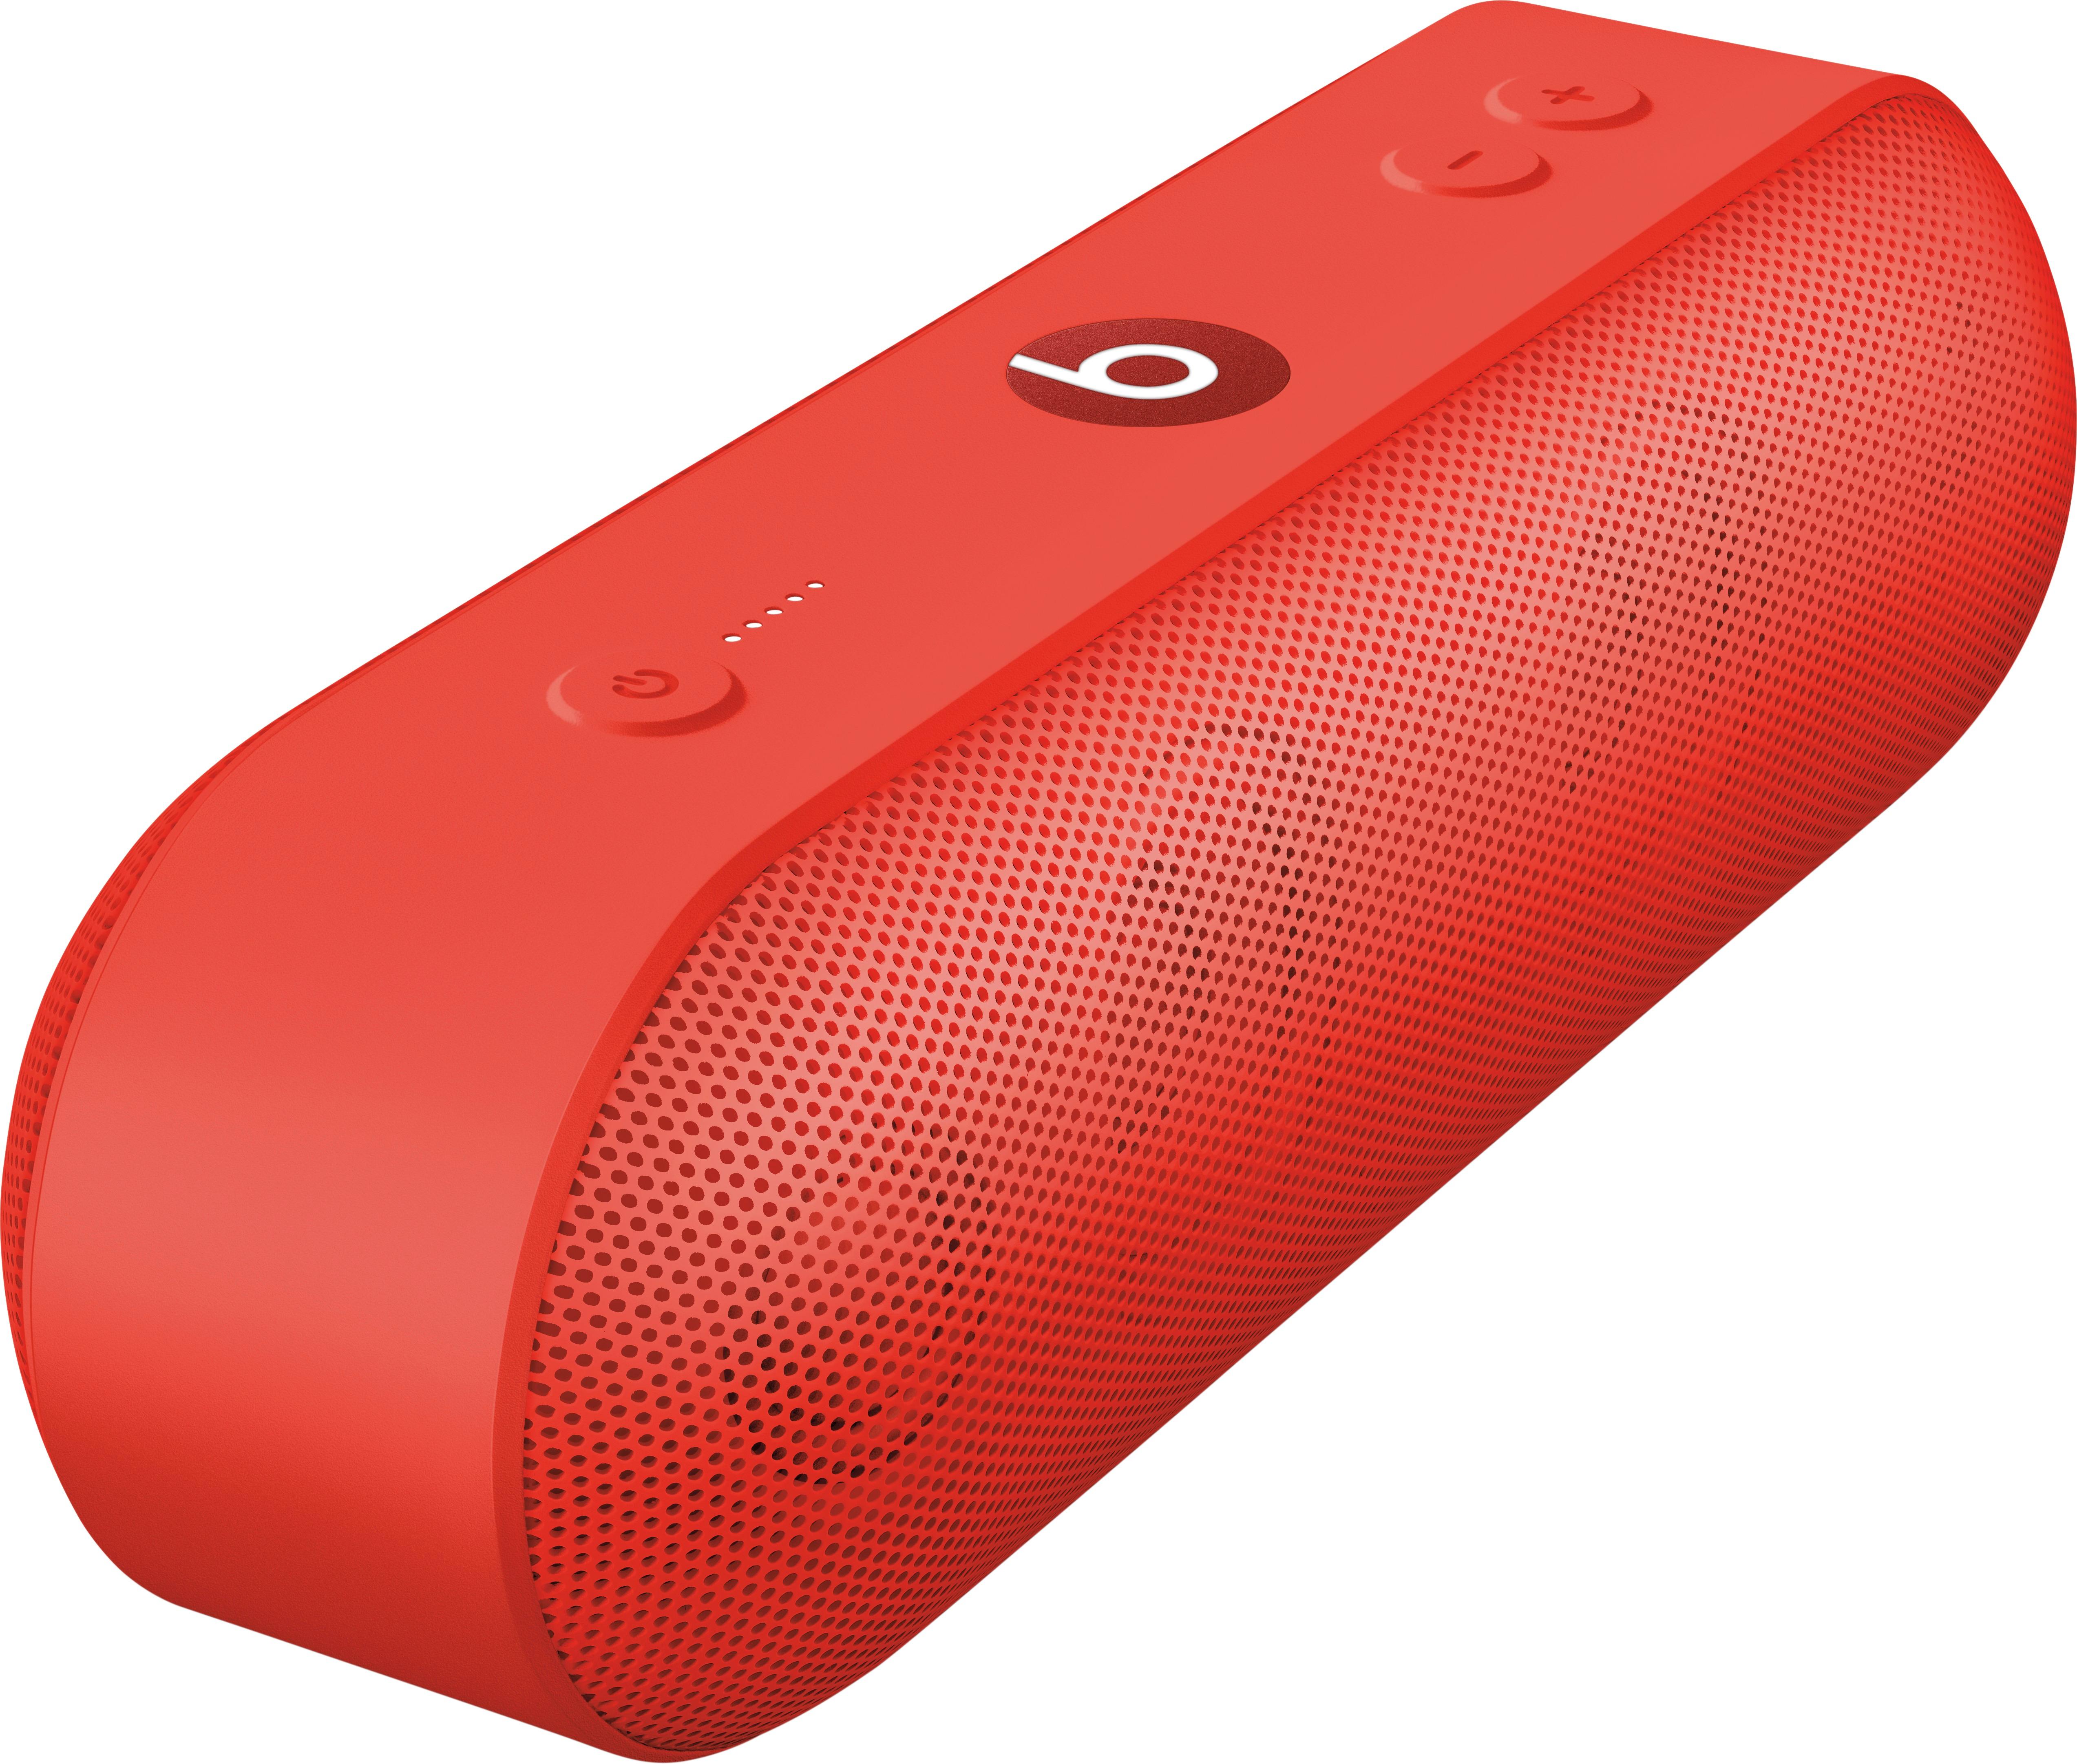 beats speaker red